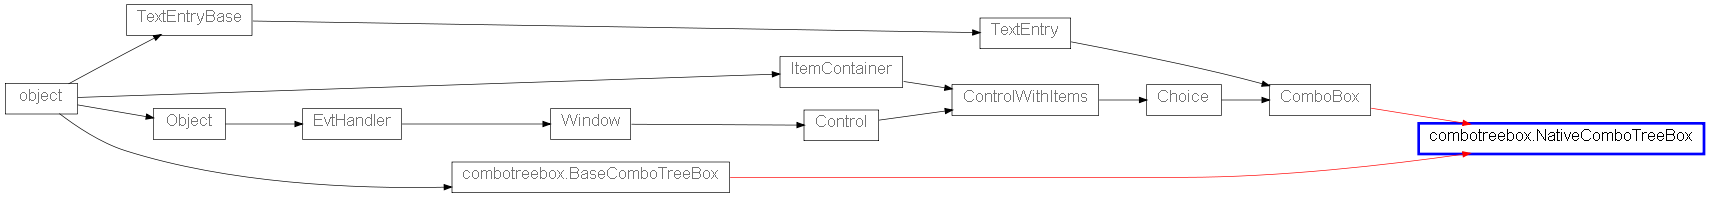 Inheritance diagram of NativeComboTreeBox